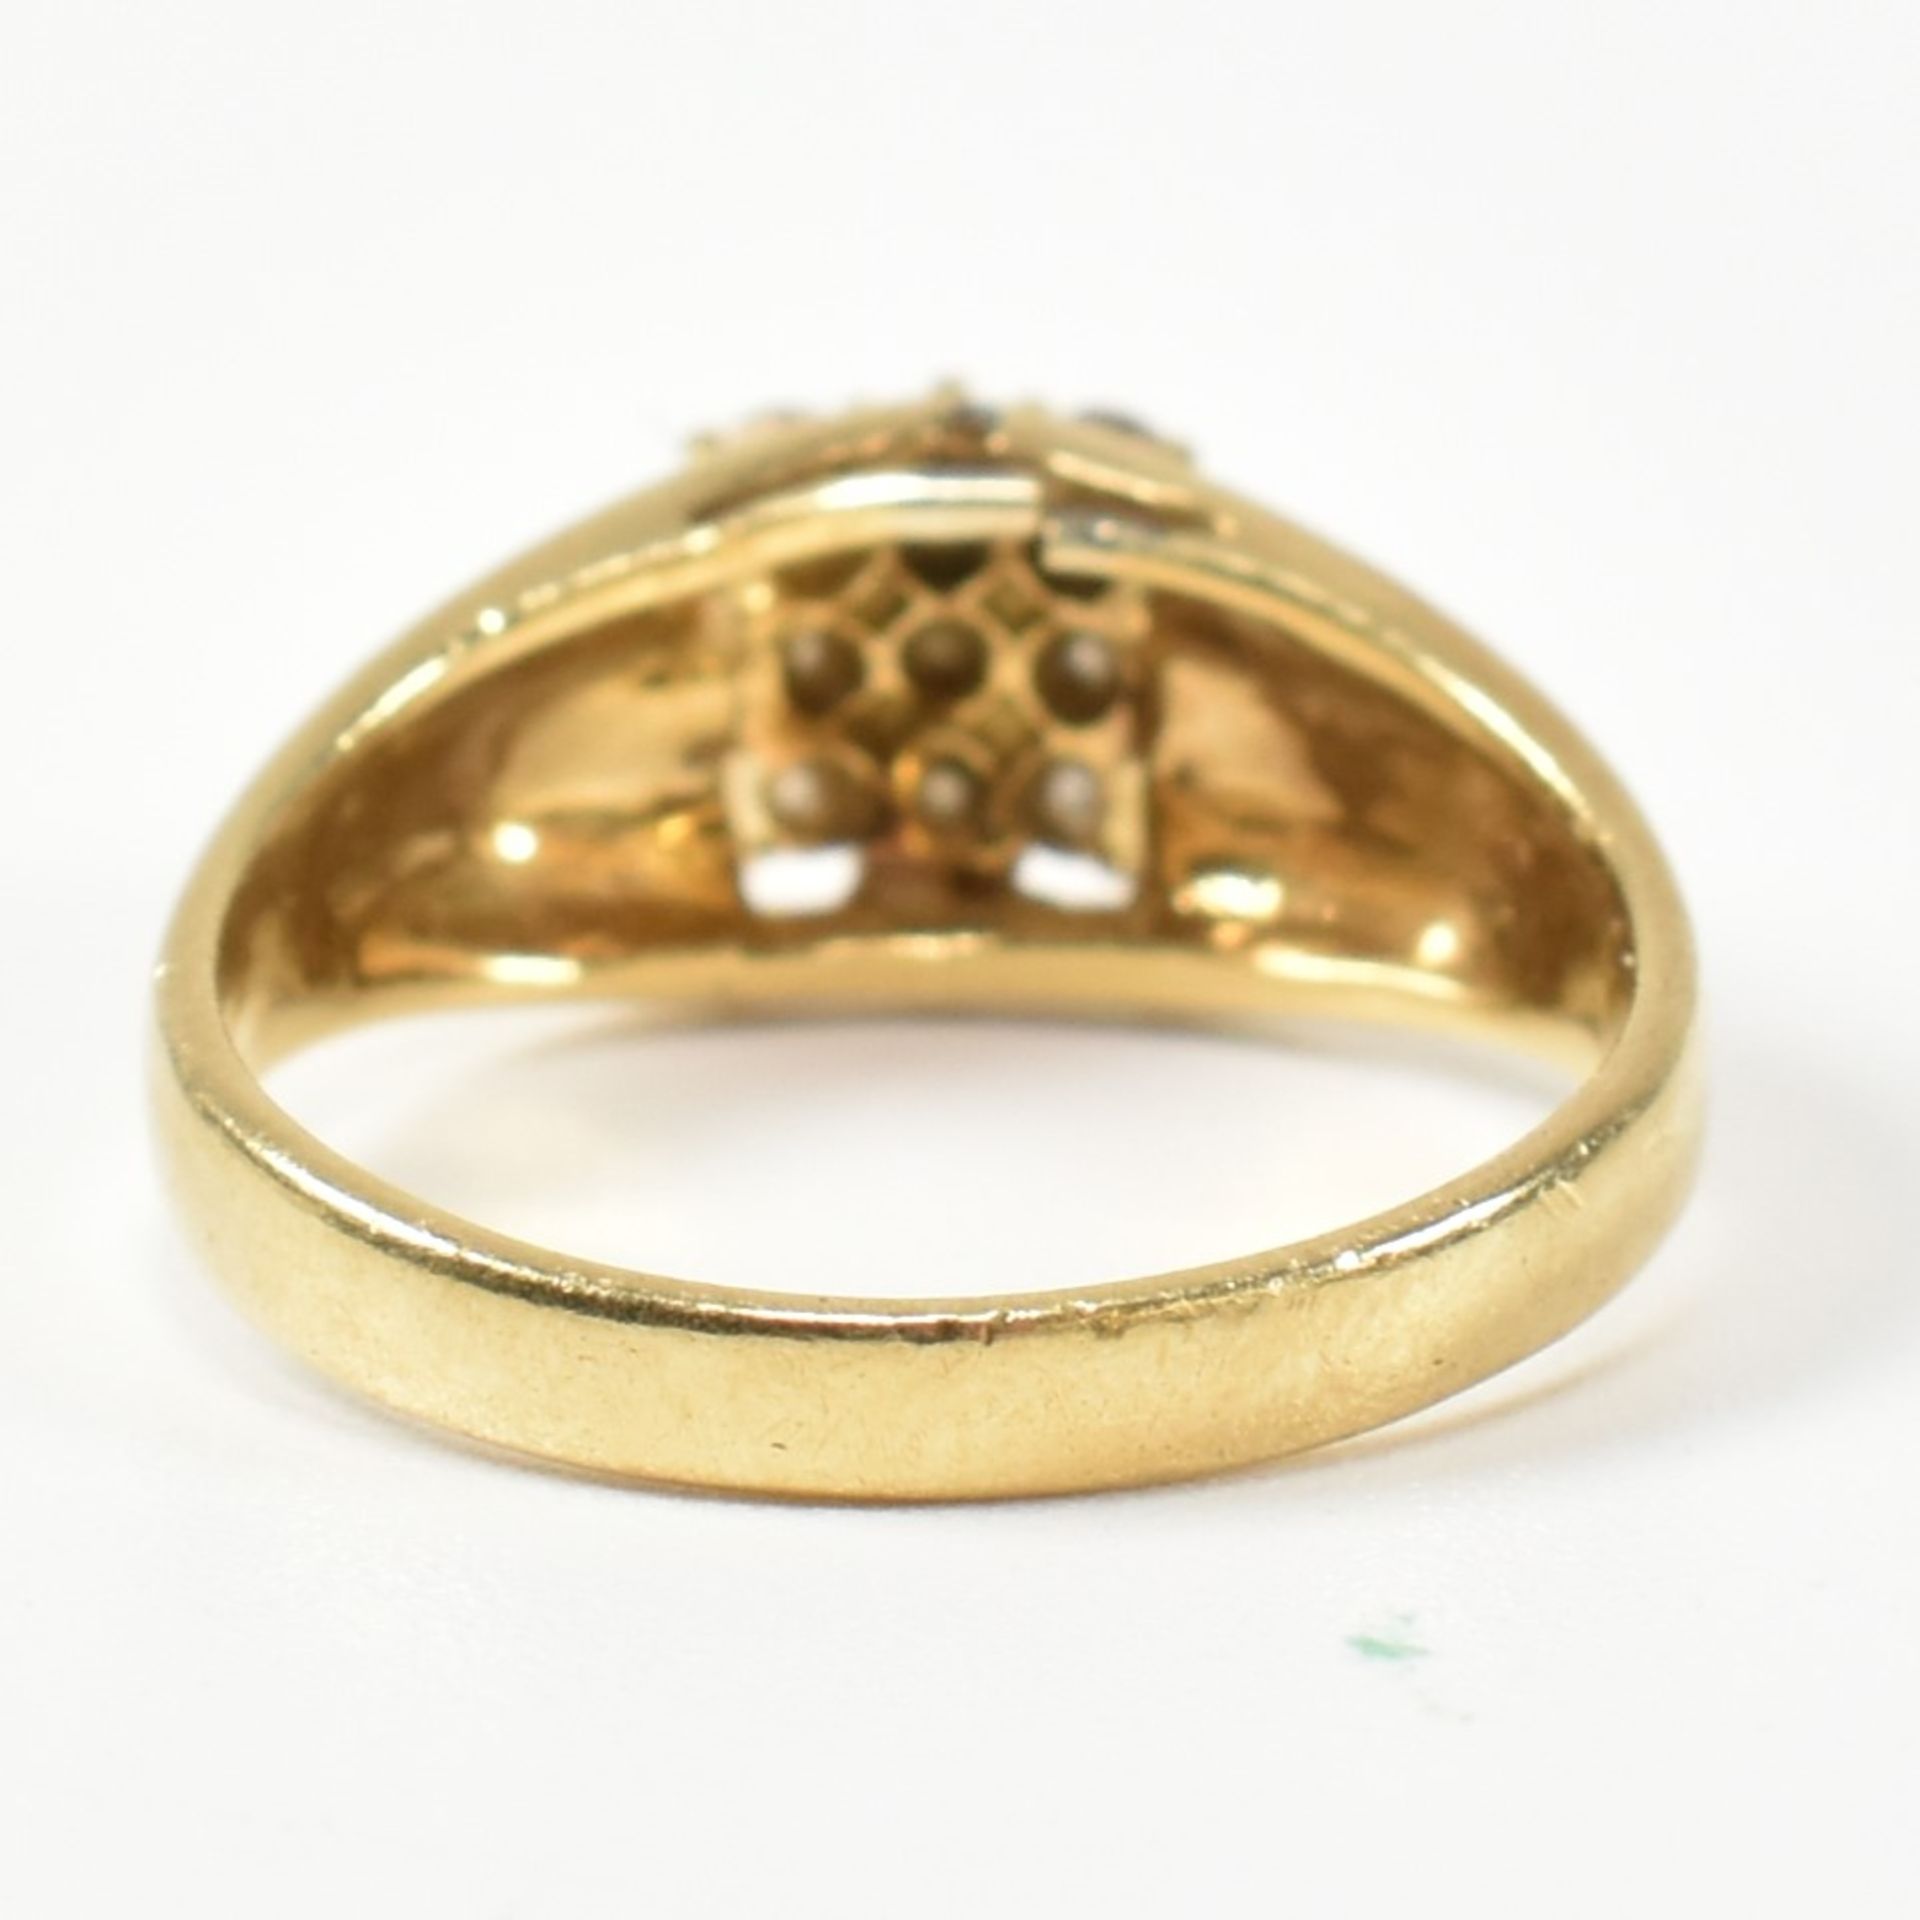 HALLMARKED 18CT GOLD & DIAMOND SIGNET RING - Image 4 of 11